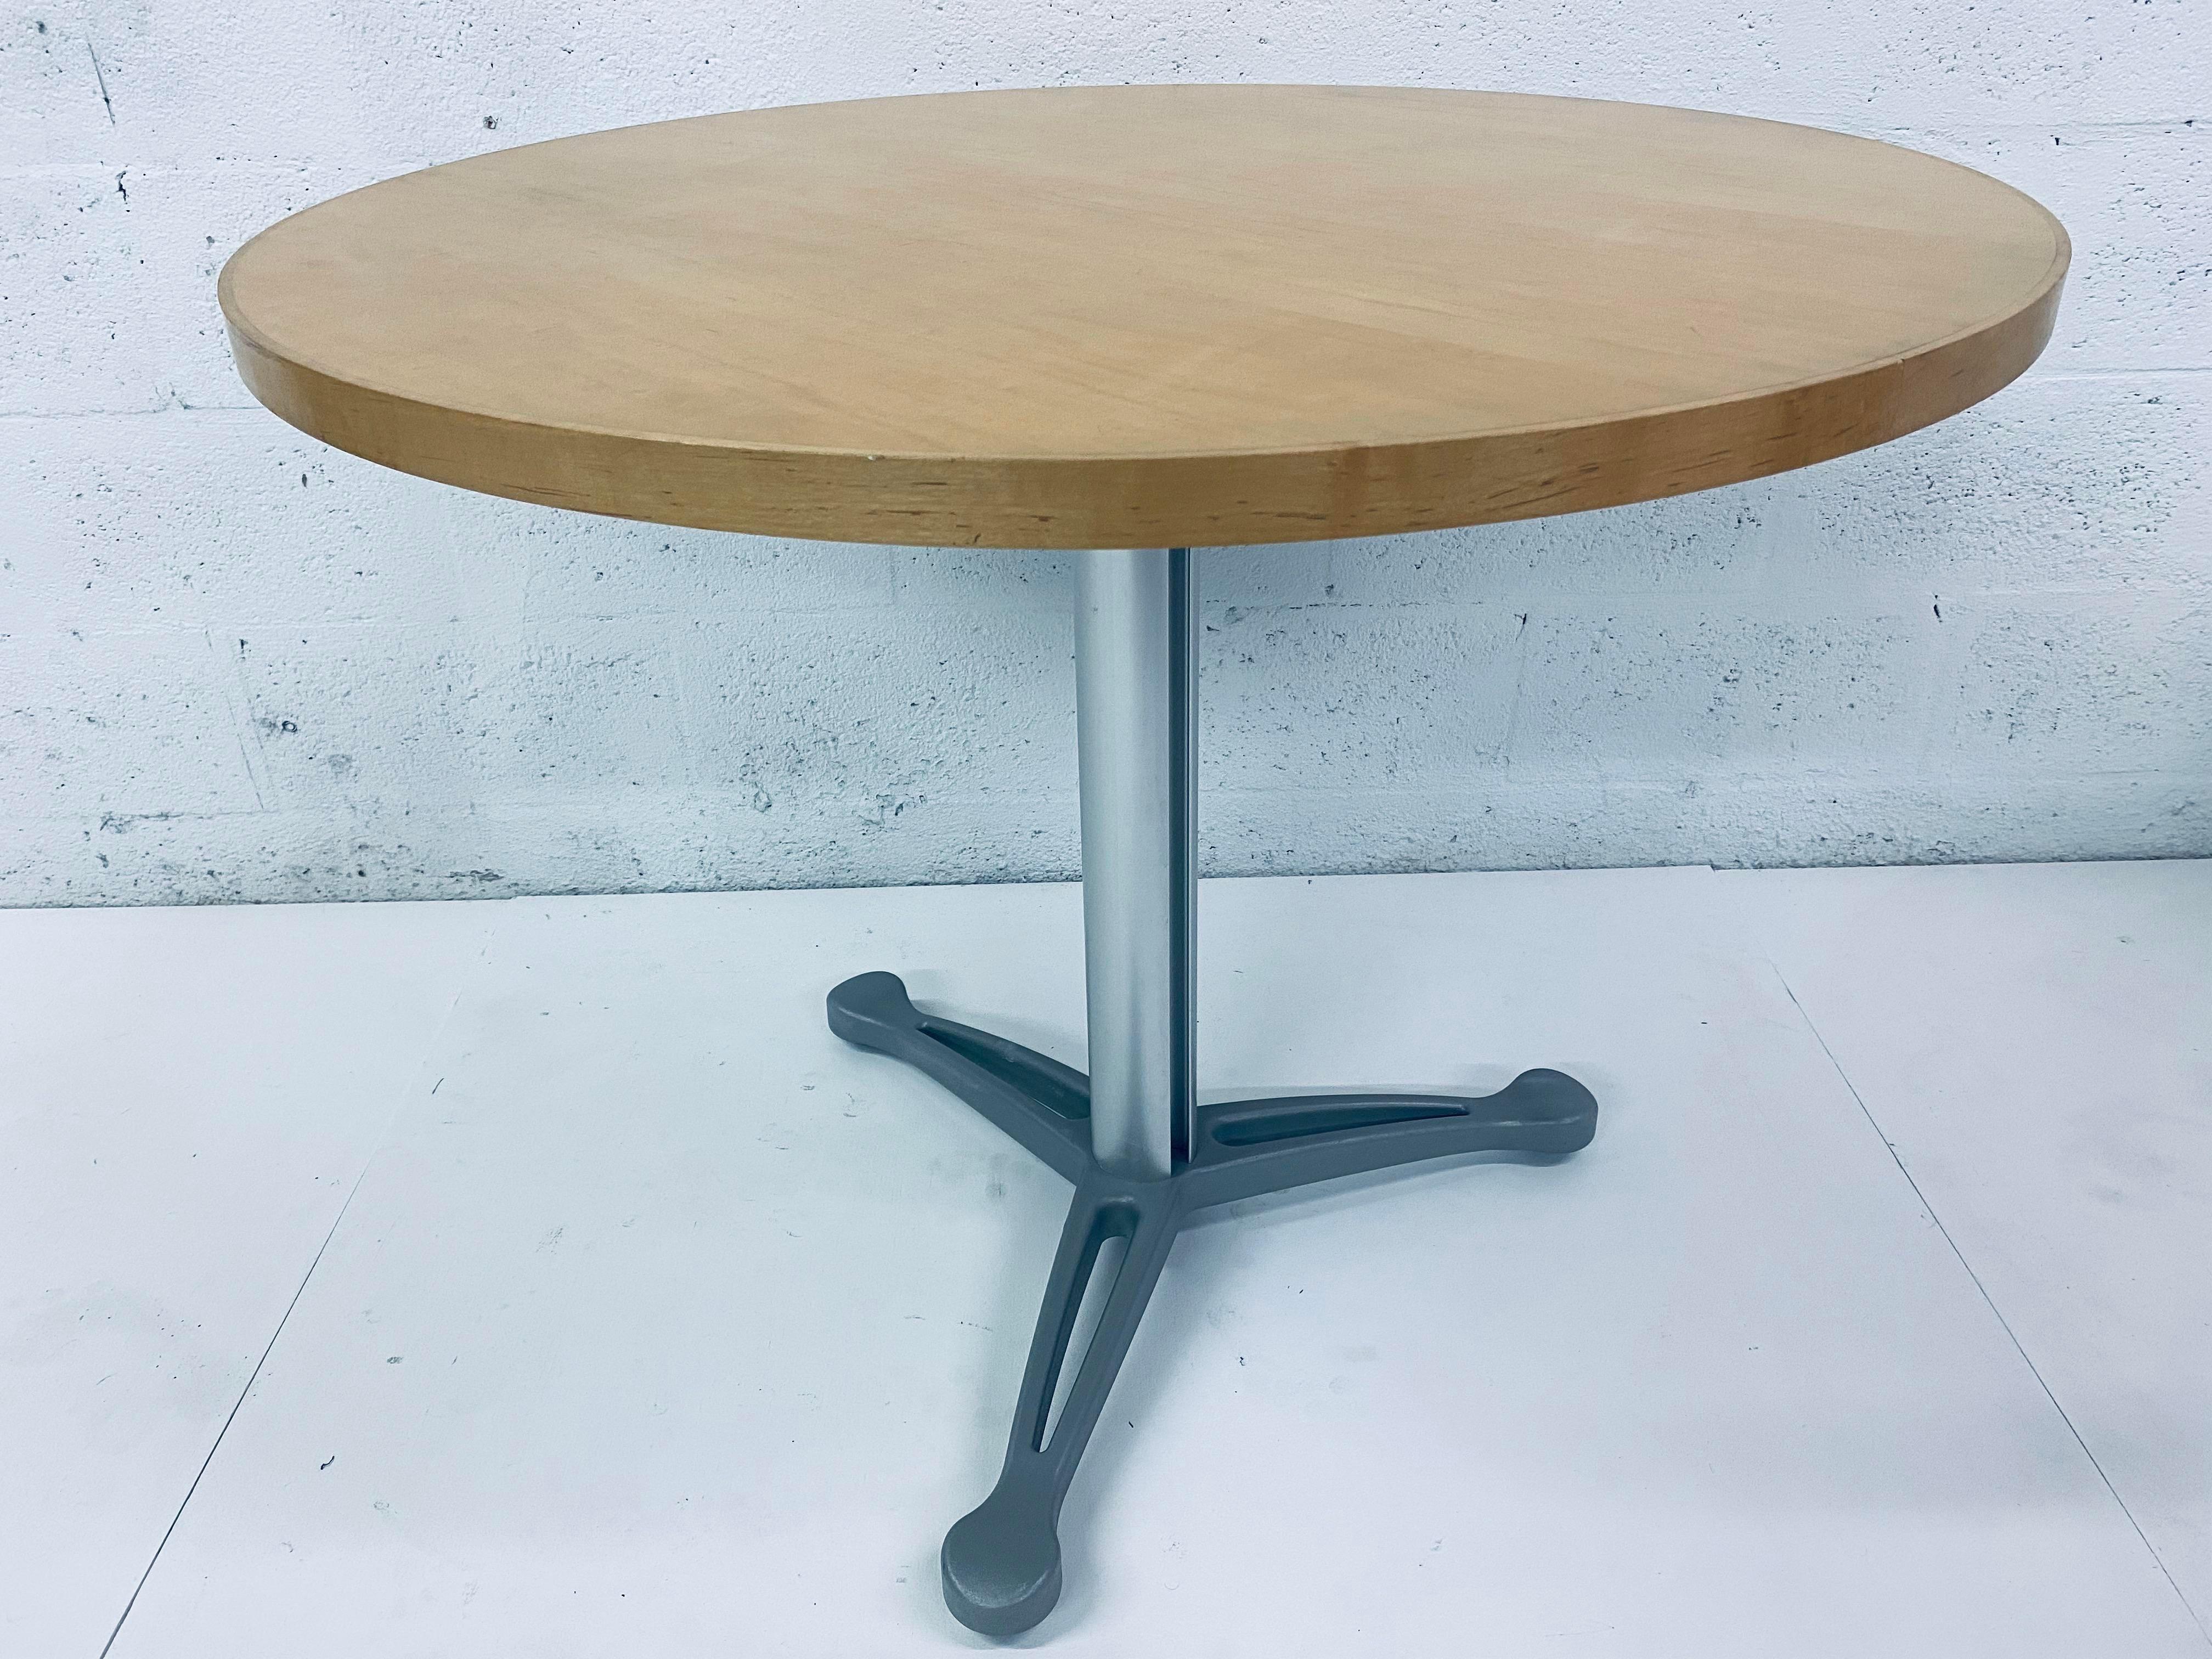 American Emanuela Frattini “Propeller” Table for Knoll For Sale